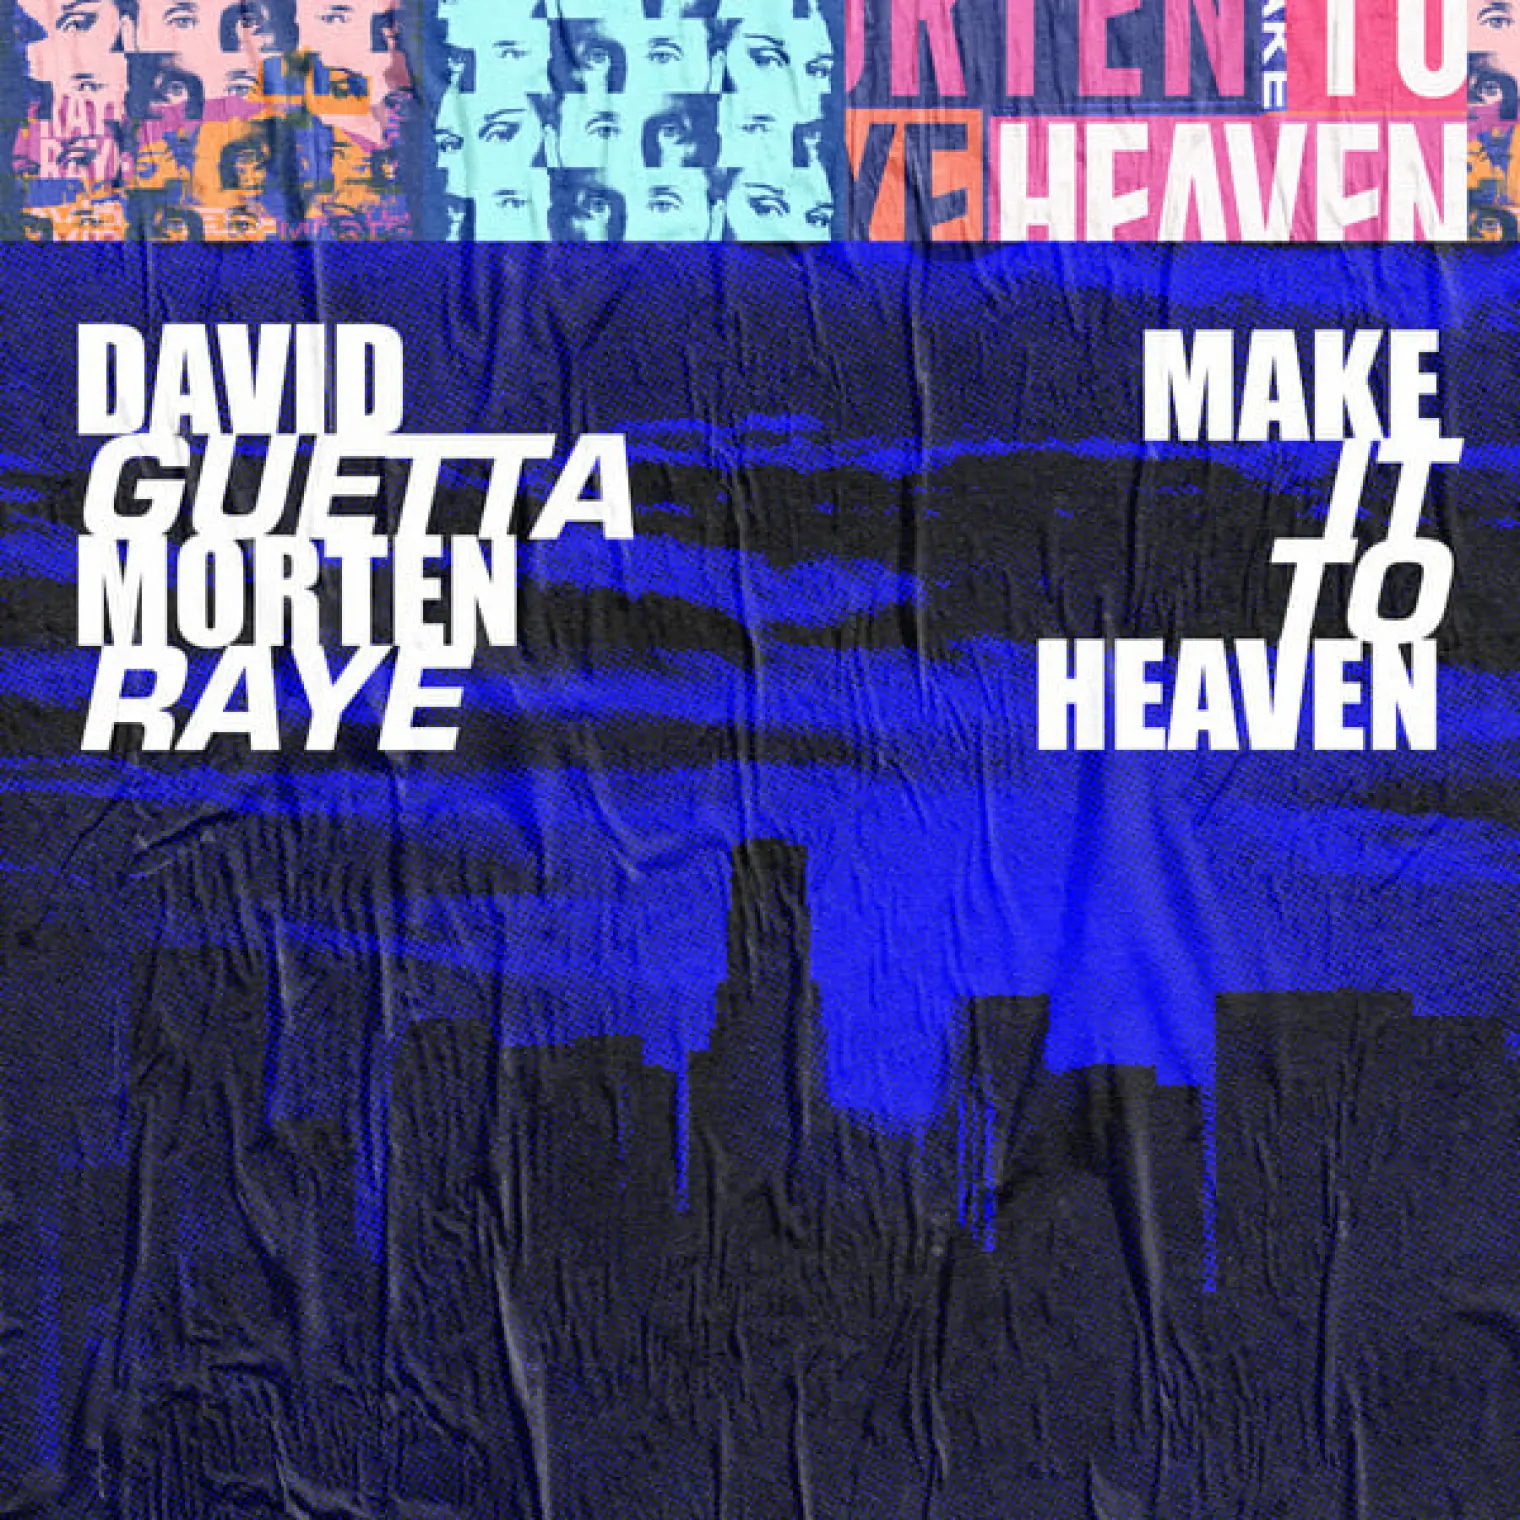 Make It To Heaven (with Raye) -  David Guetta 